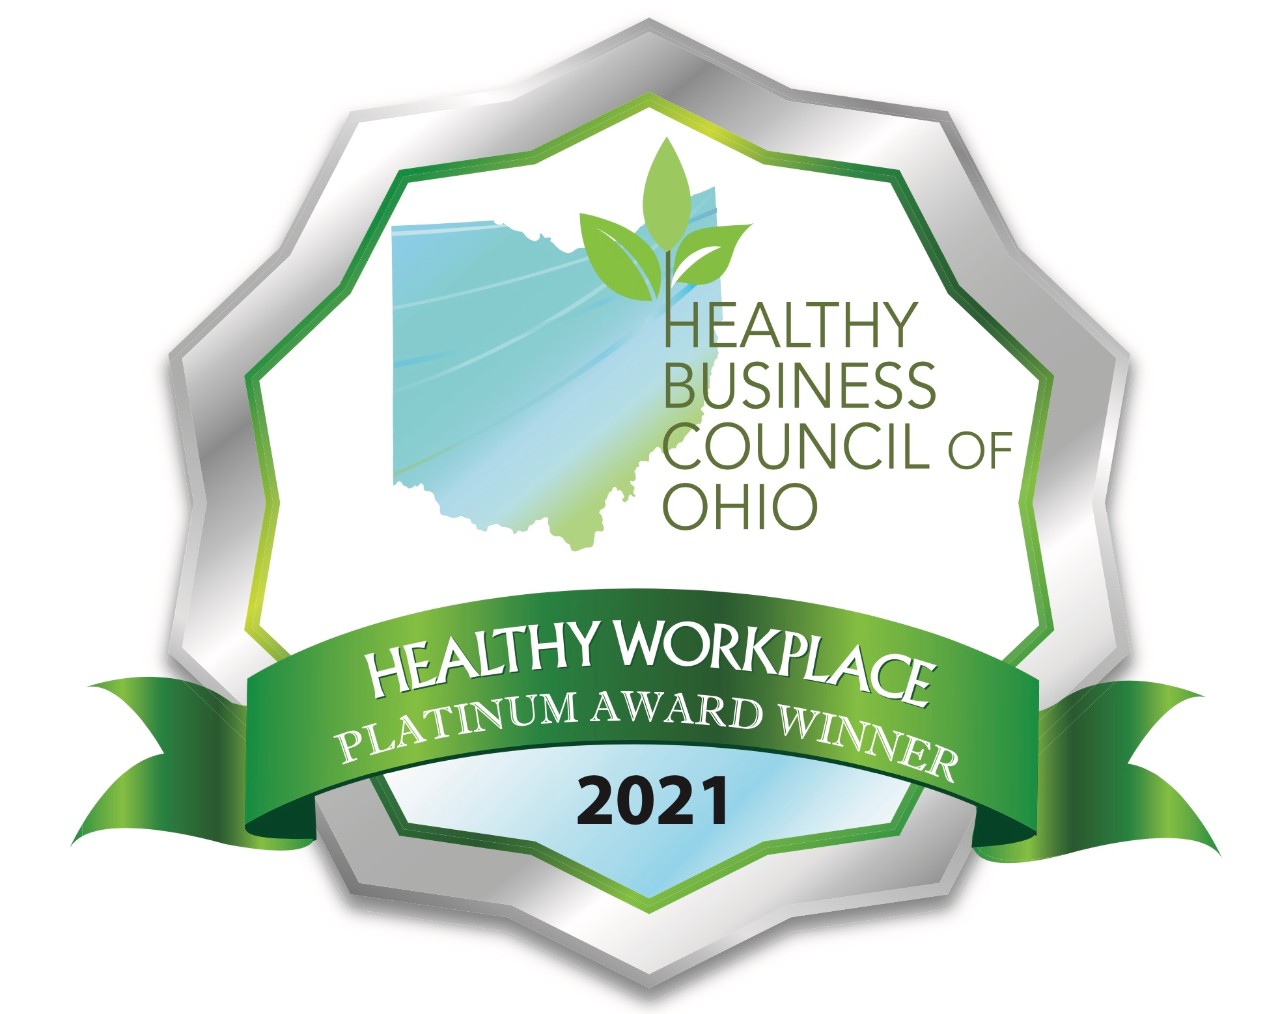 Healthy Worksite Platinum Award Winner 2021